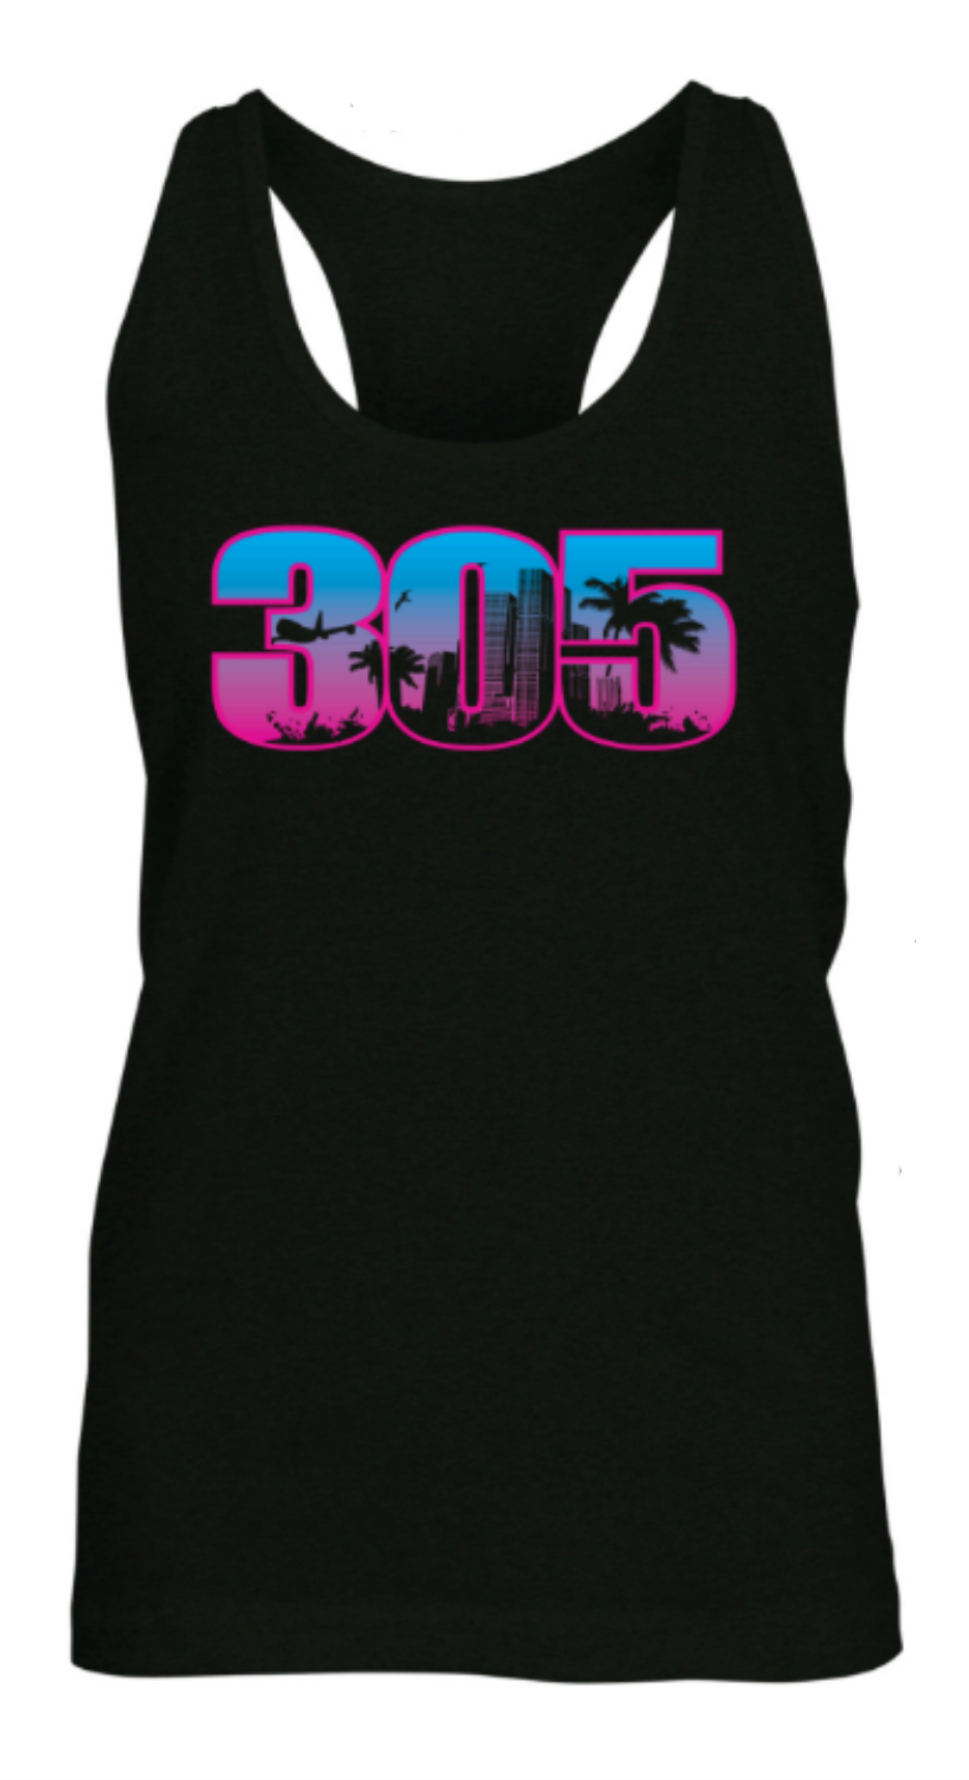 305 Miami Skyline Women's Tank Top - Black